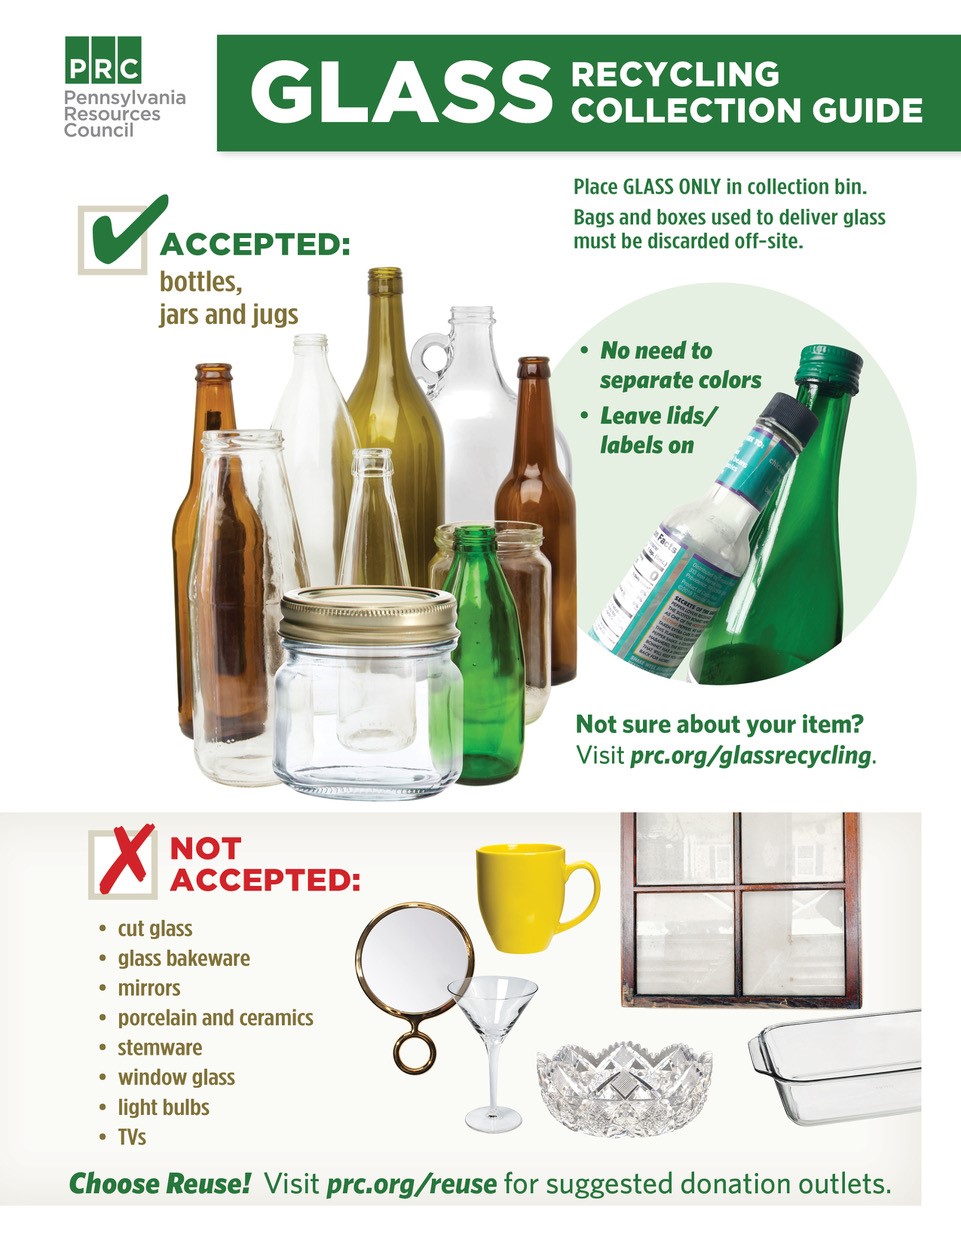 twaalf Beschaven Pigment PRC - General Info on Glass Recycling